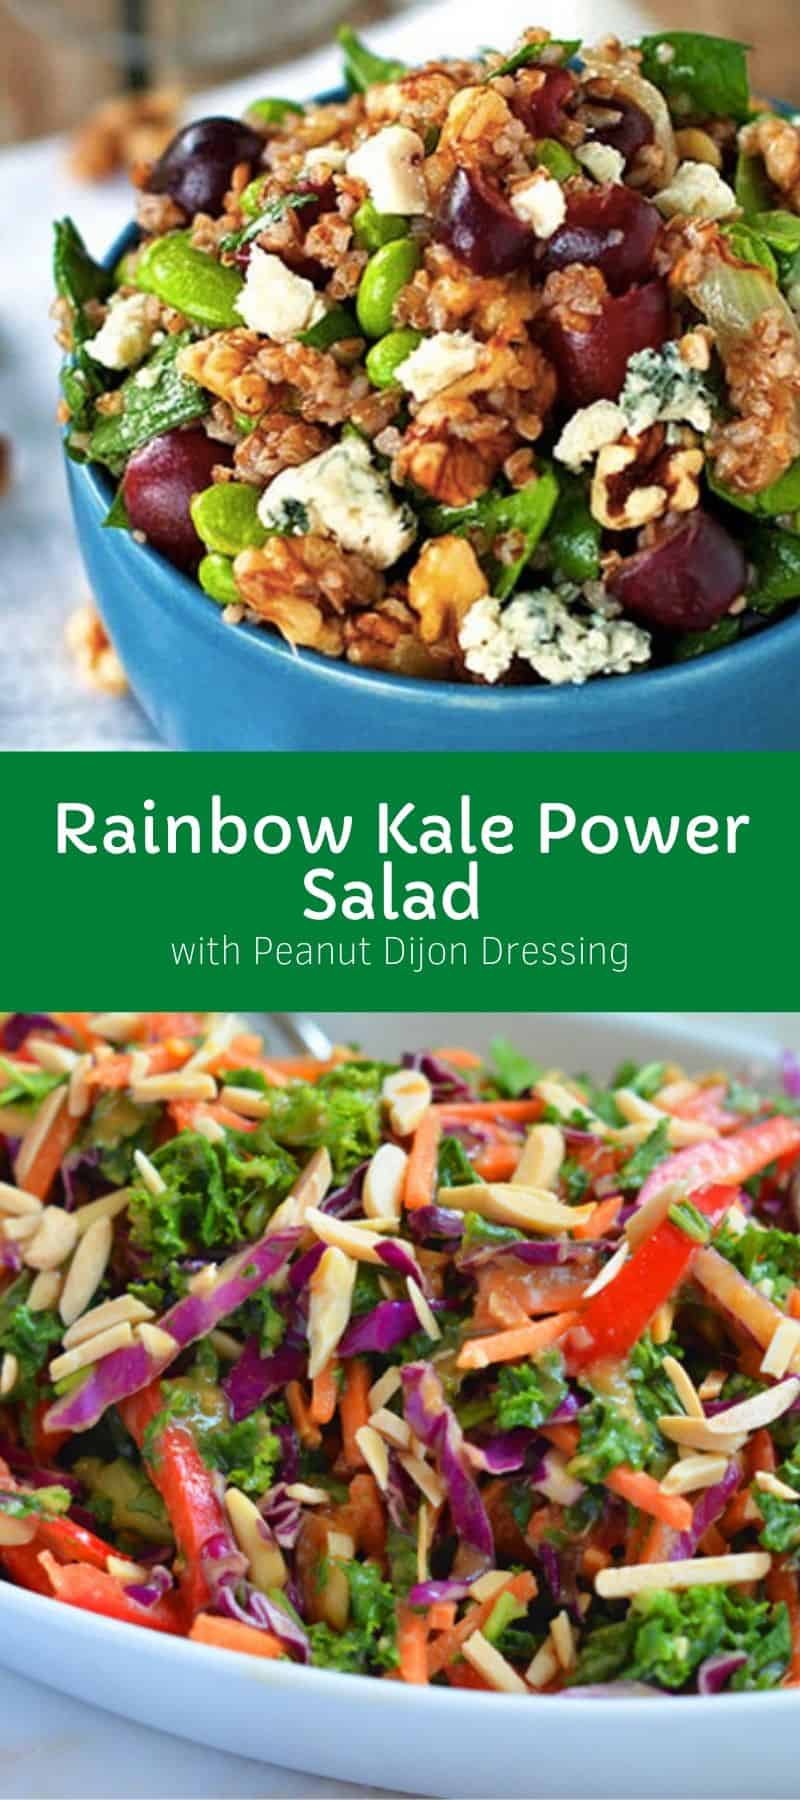 Rainbow Kale Power Salad with Peanut Dijon Dressing 3